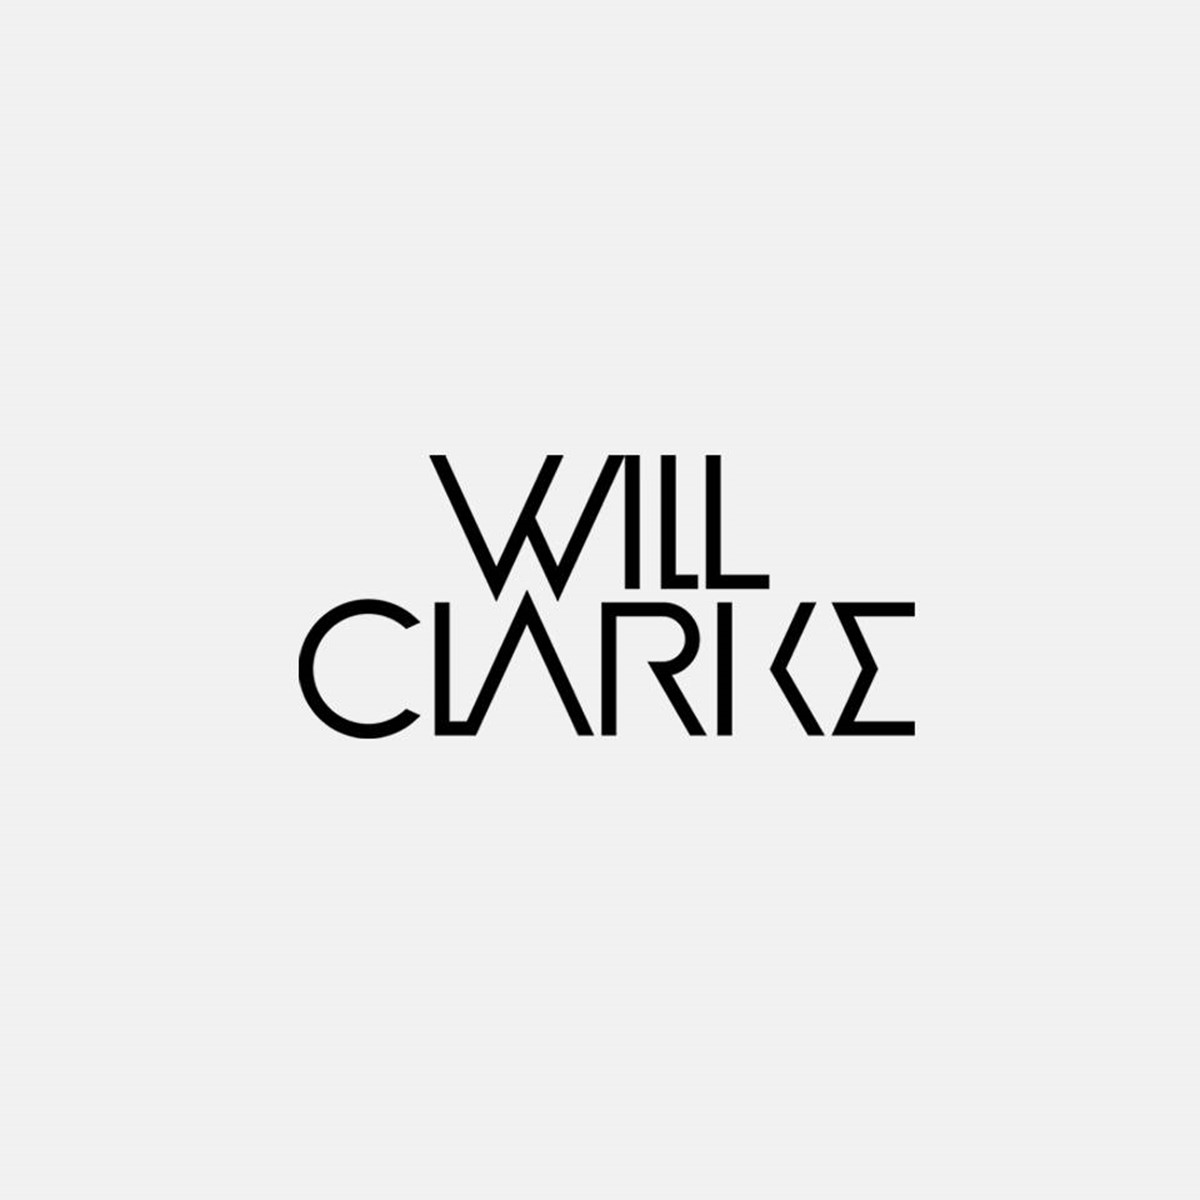 Will Clarke. Stacked logotype. Brand identity design by Superfried.